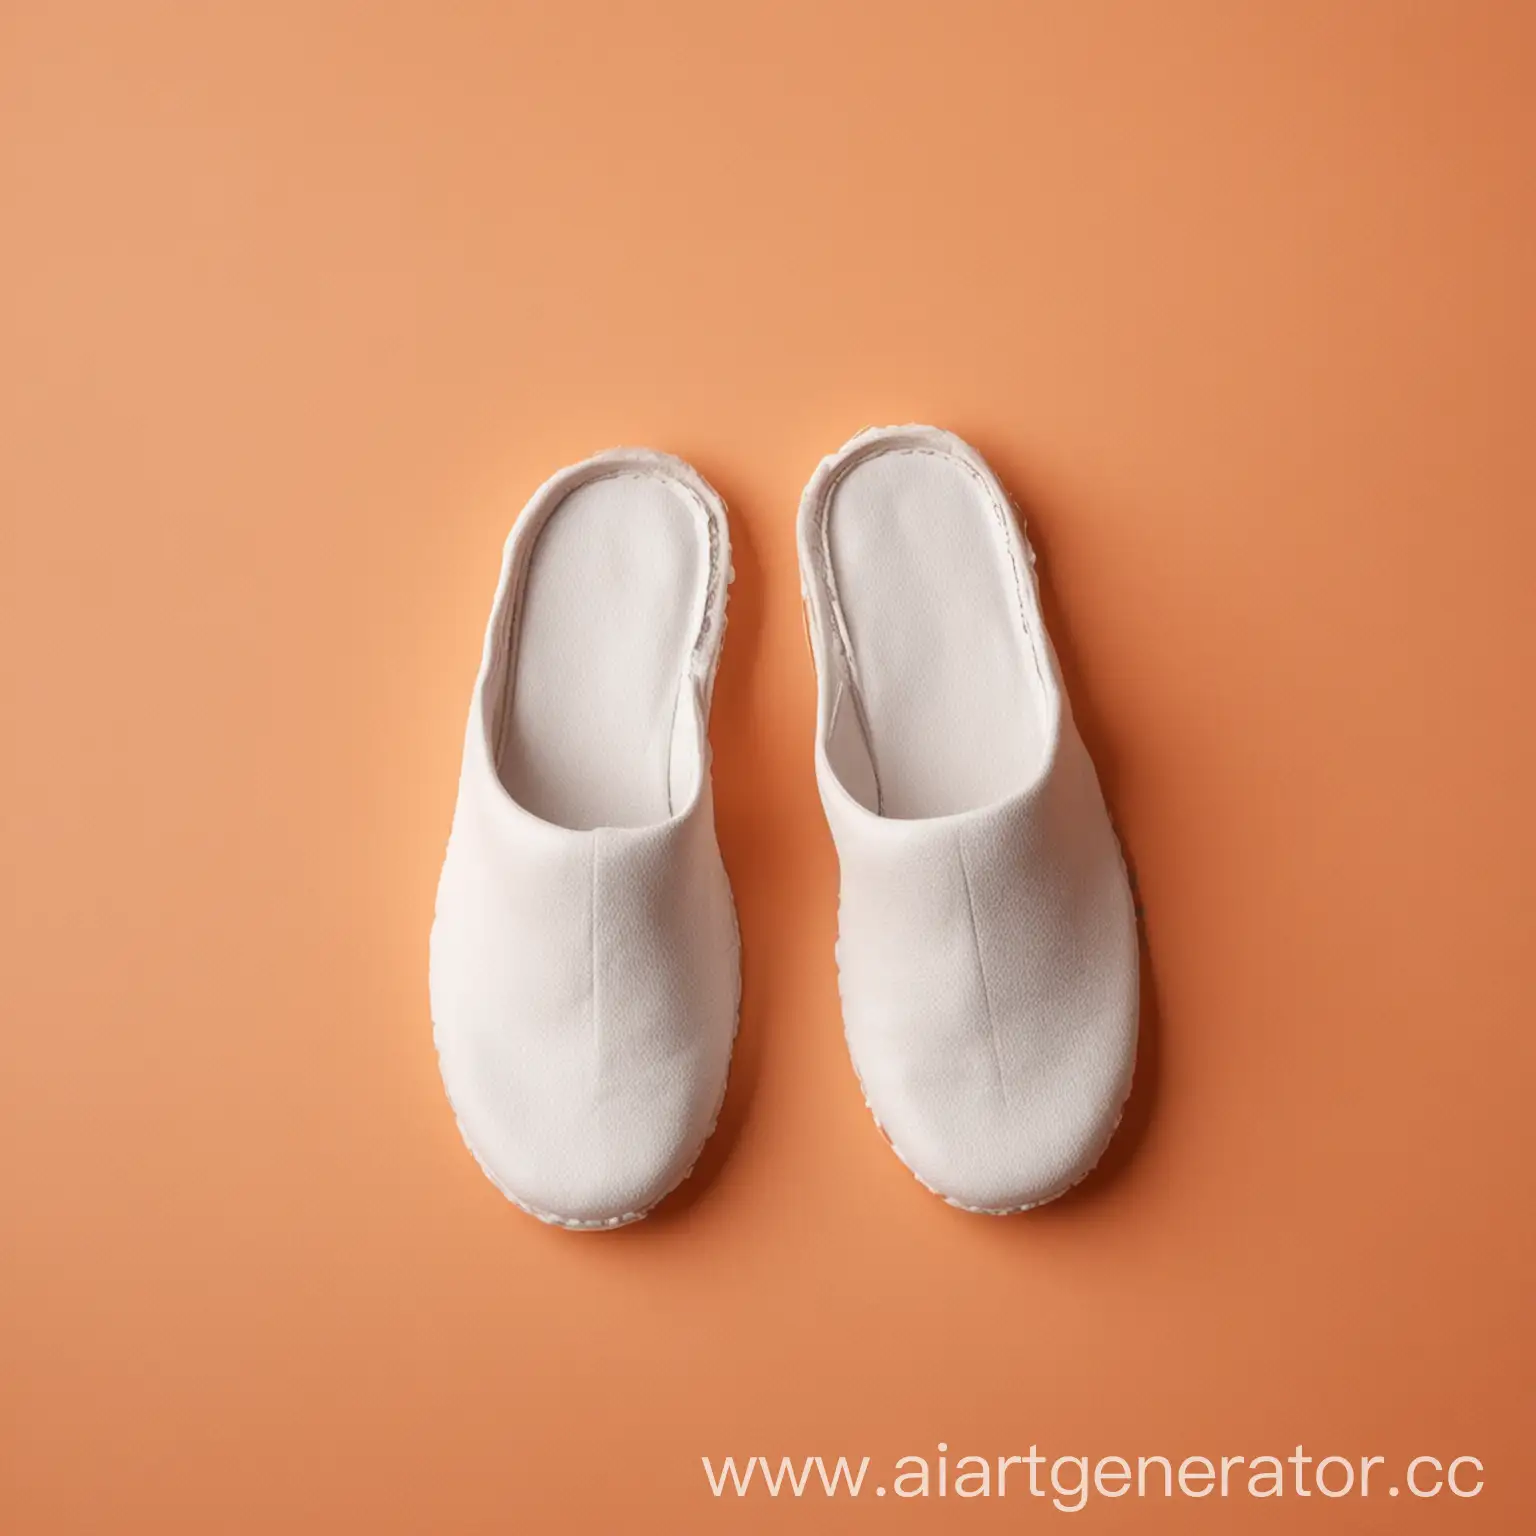 Monochrome-White-Slippers-on-Vibrant-Orange-Background